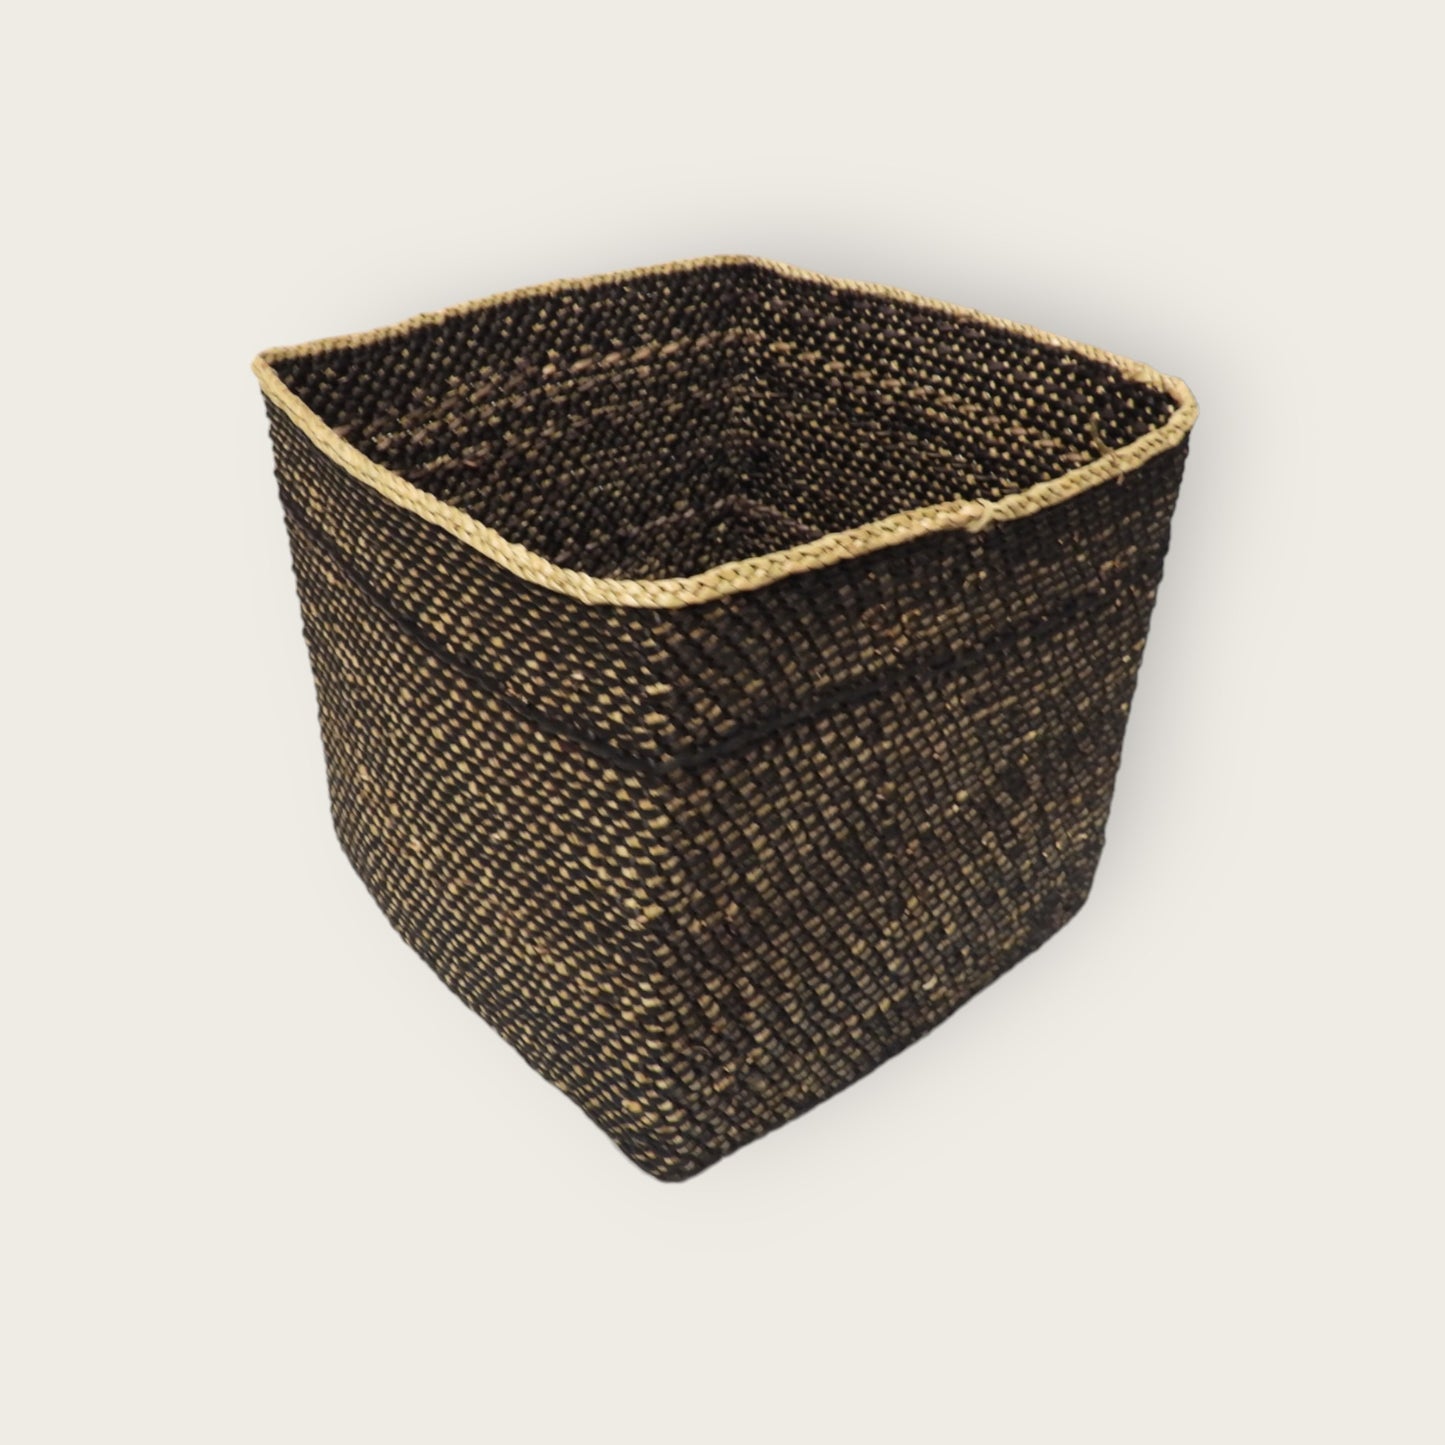 PEMBE Basket - Black&Natural